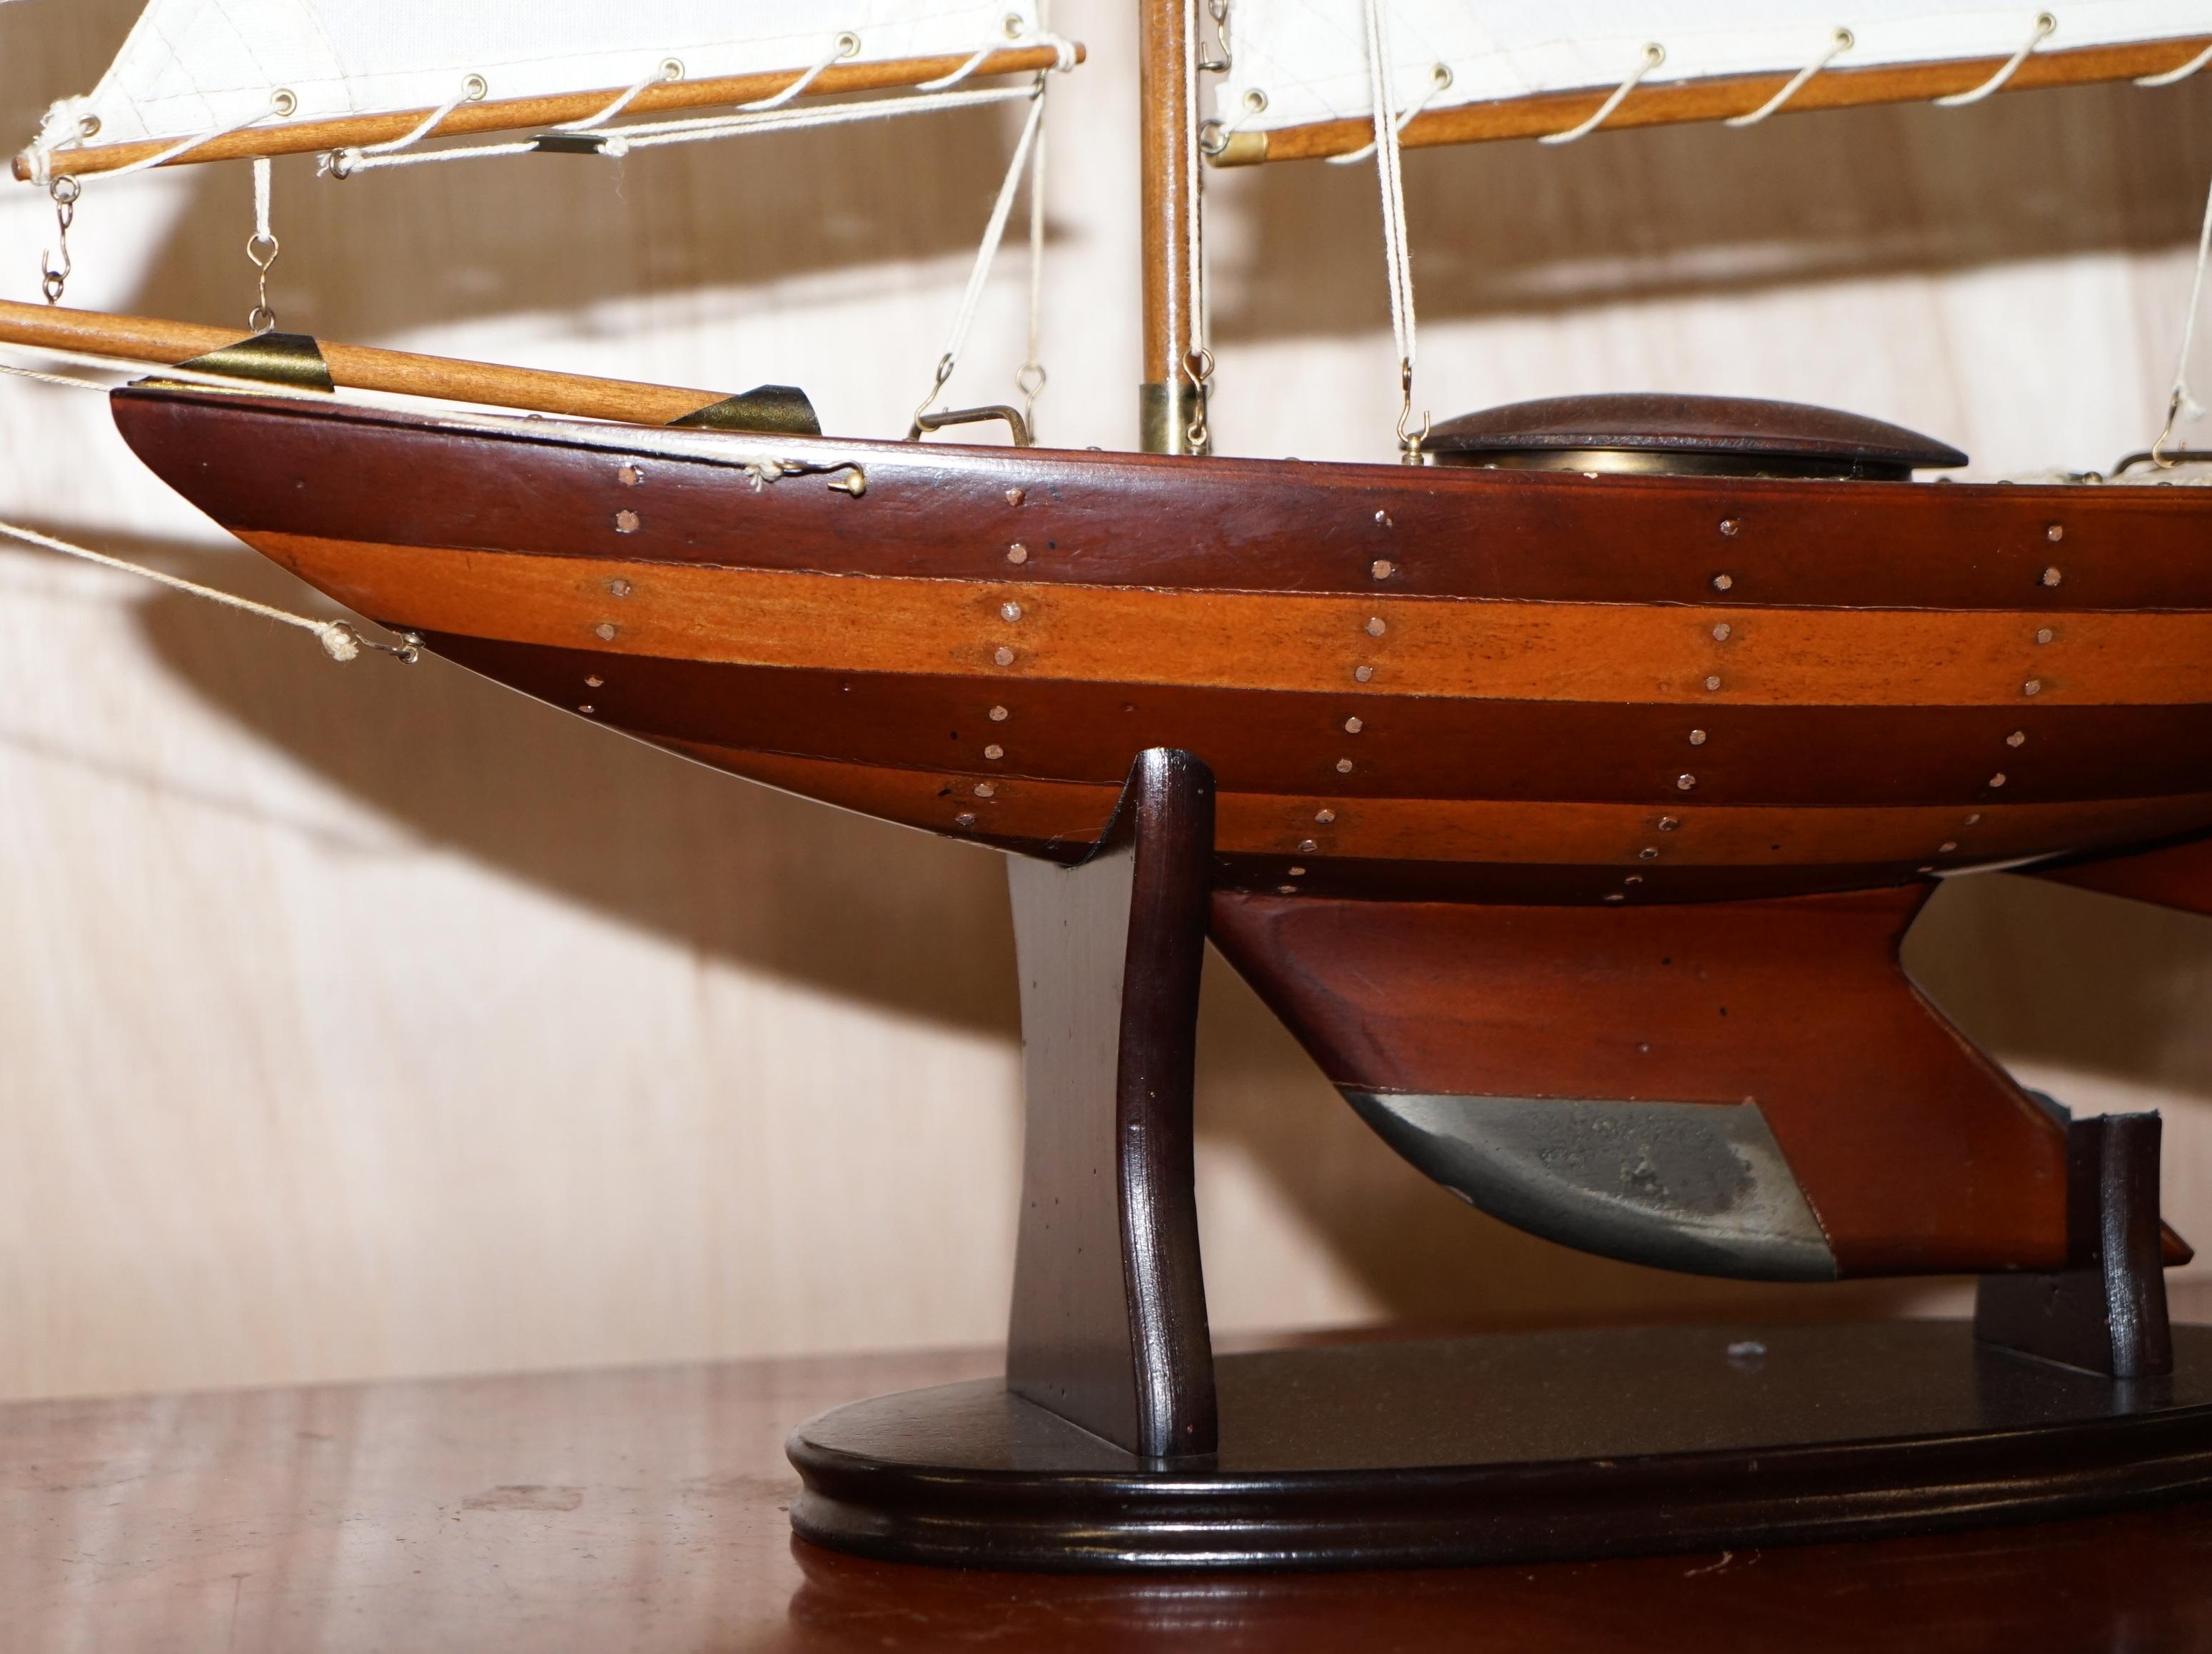 English Stunning Large Hand Carved Wooden Model Boat Working Rudder Large Sails Nice